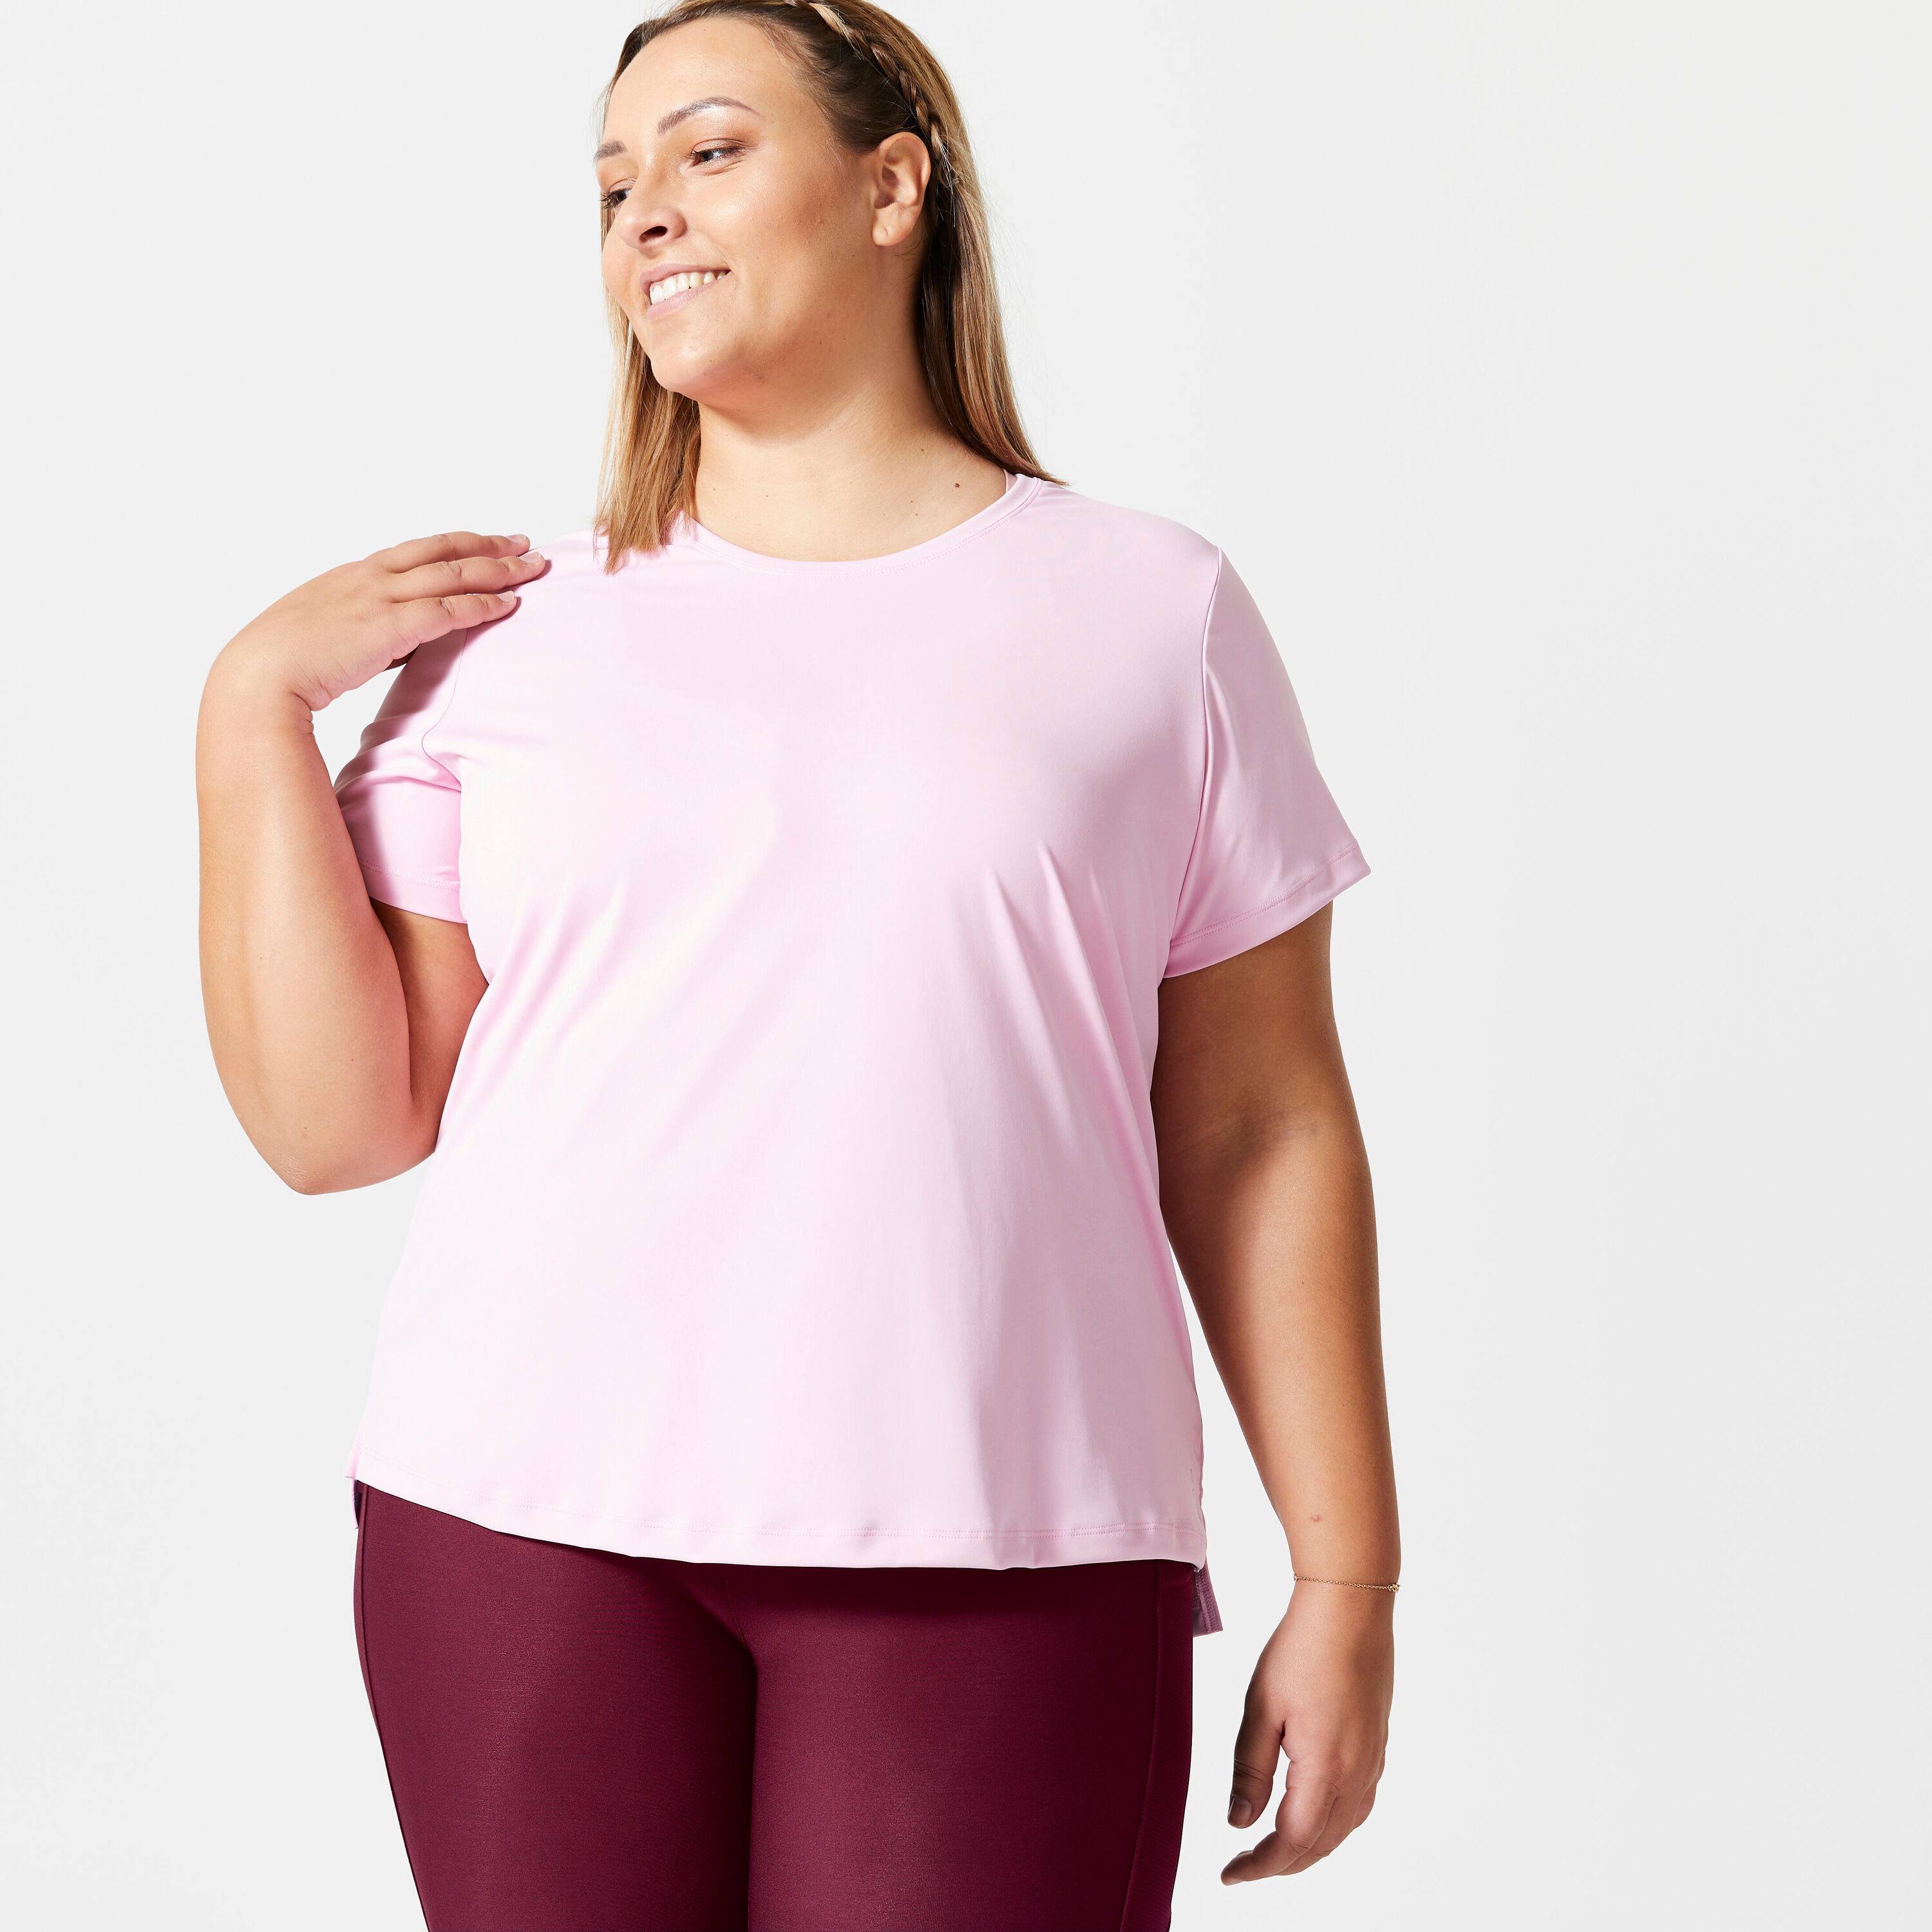 DOMYOS Women's Cardio Fitness Short-Sleeved Plus Size T-Shirt - Light Pink